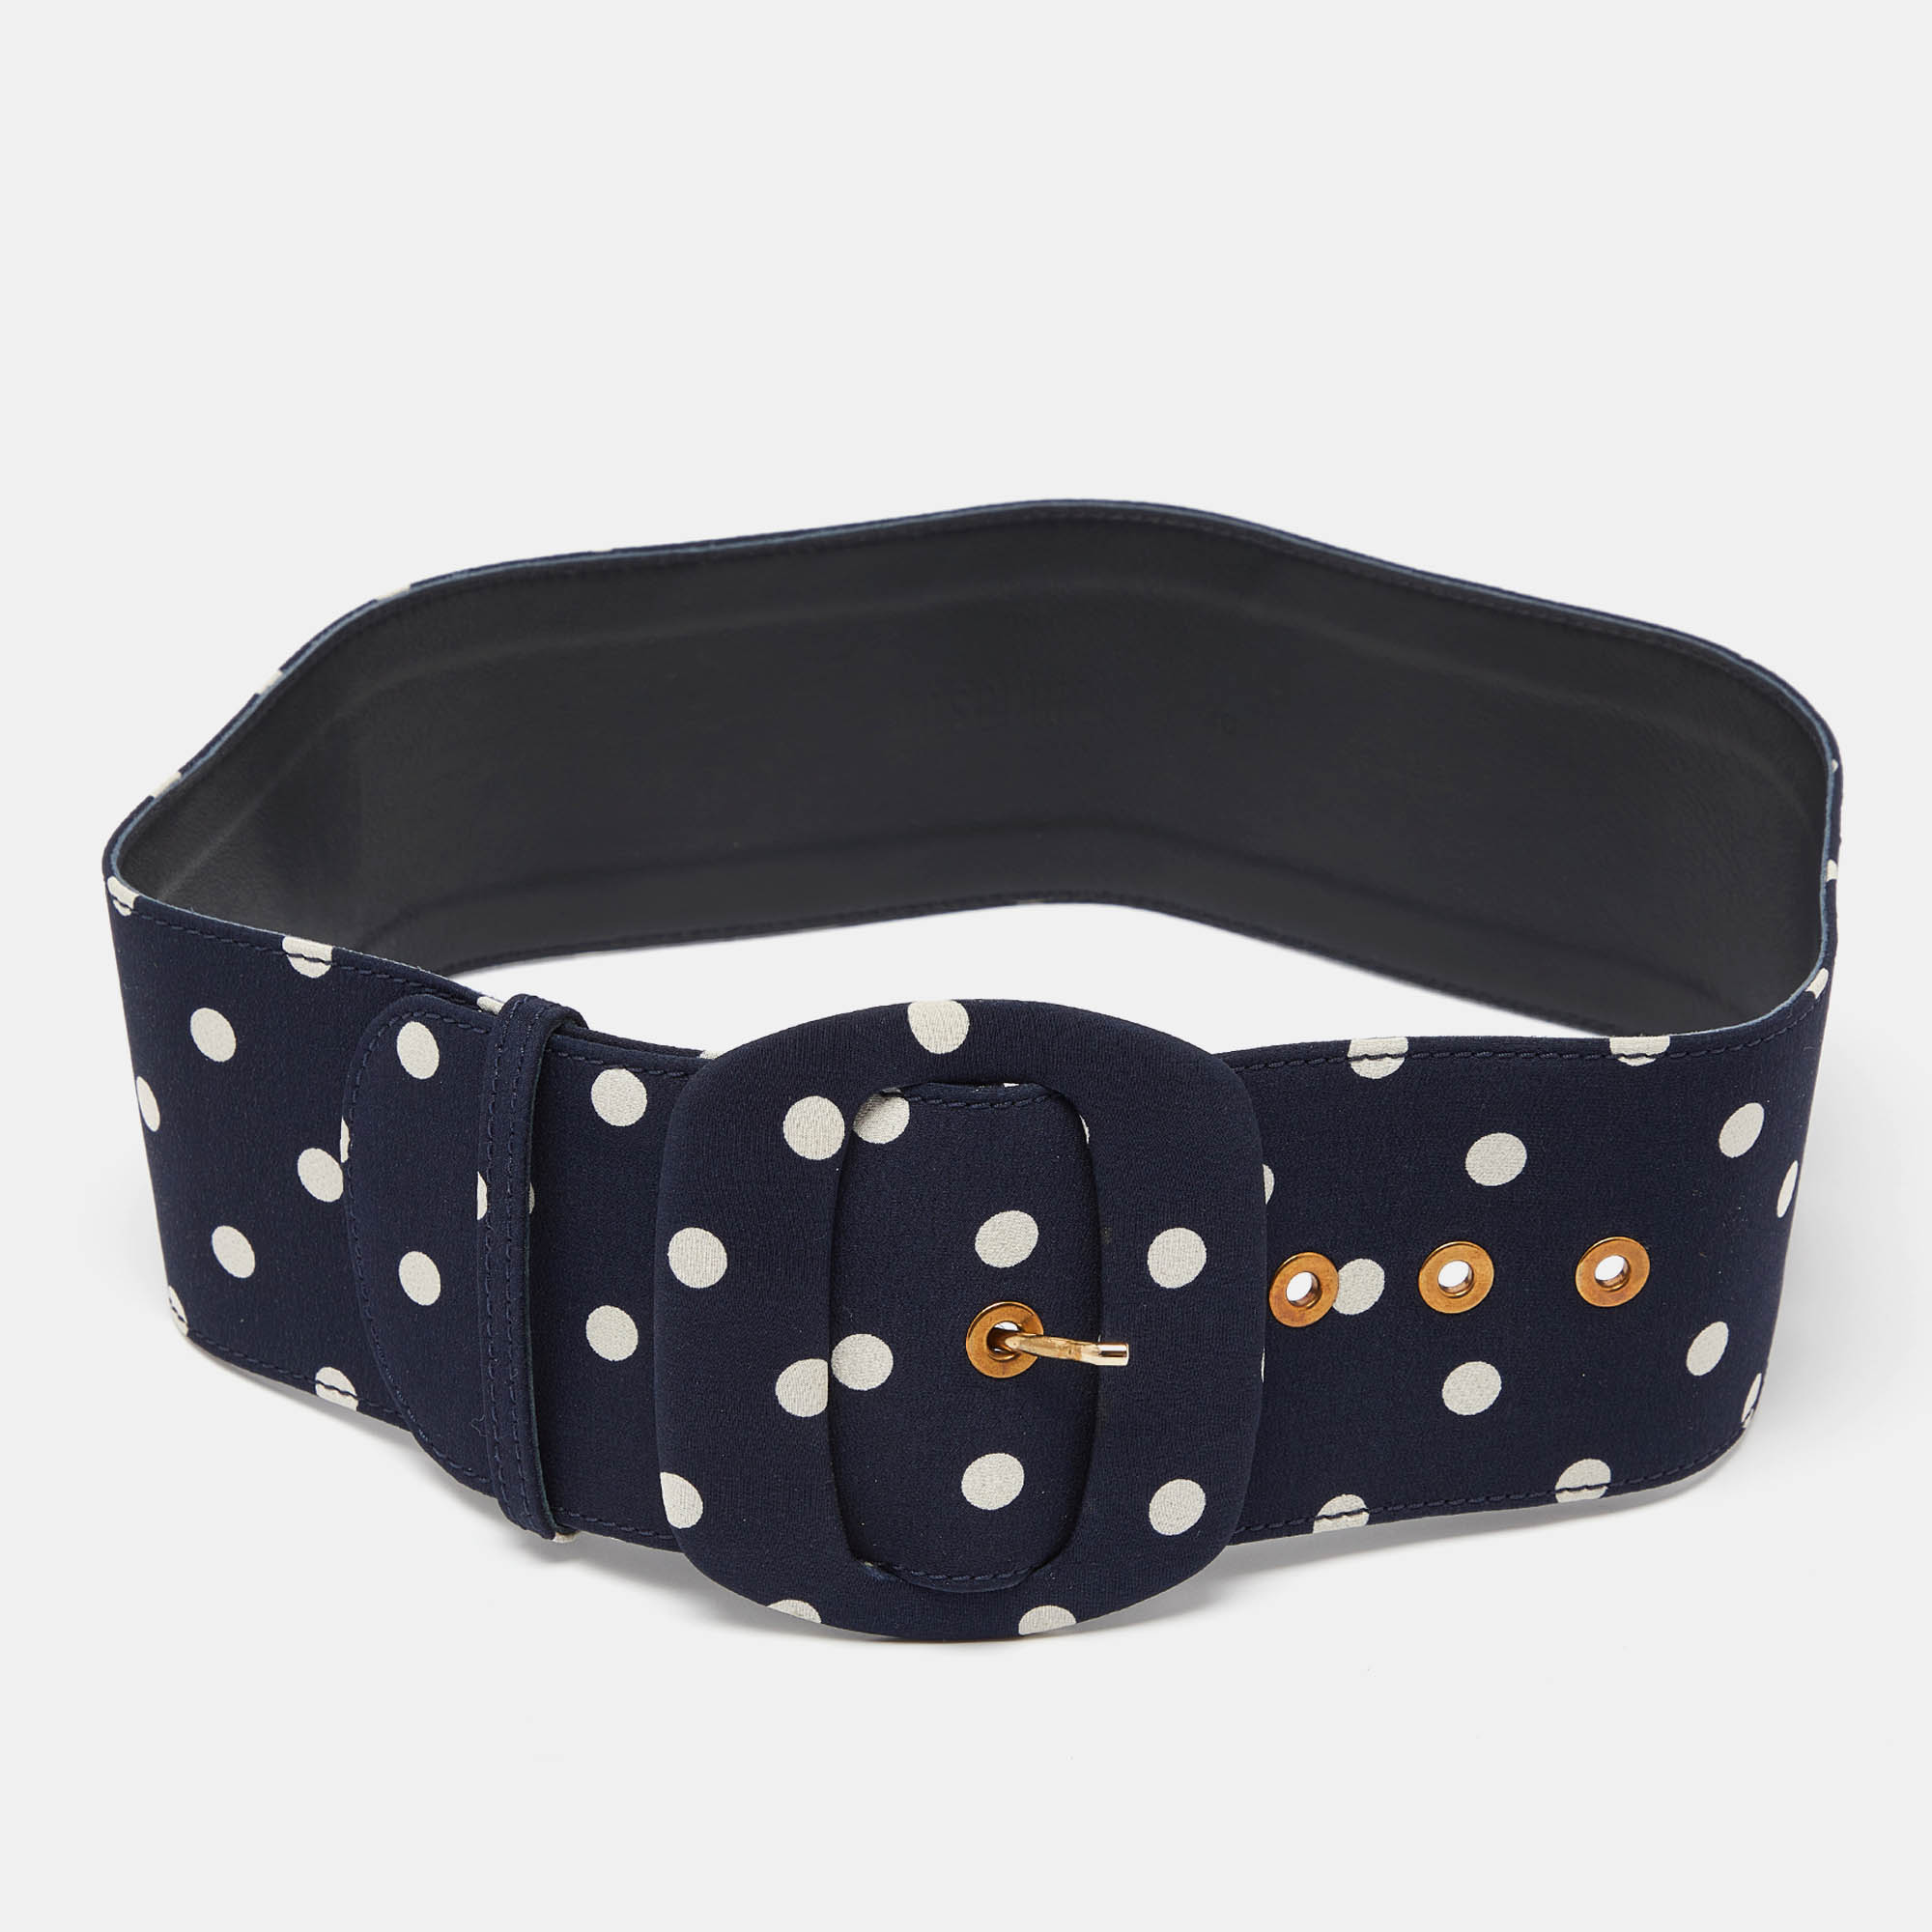 Moschino navy blue/white polka dot buckle wide belt